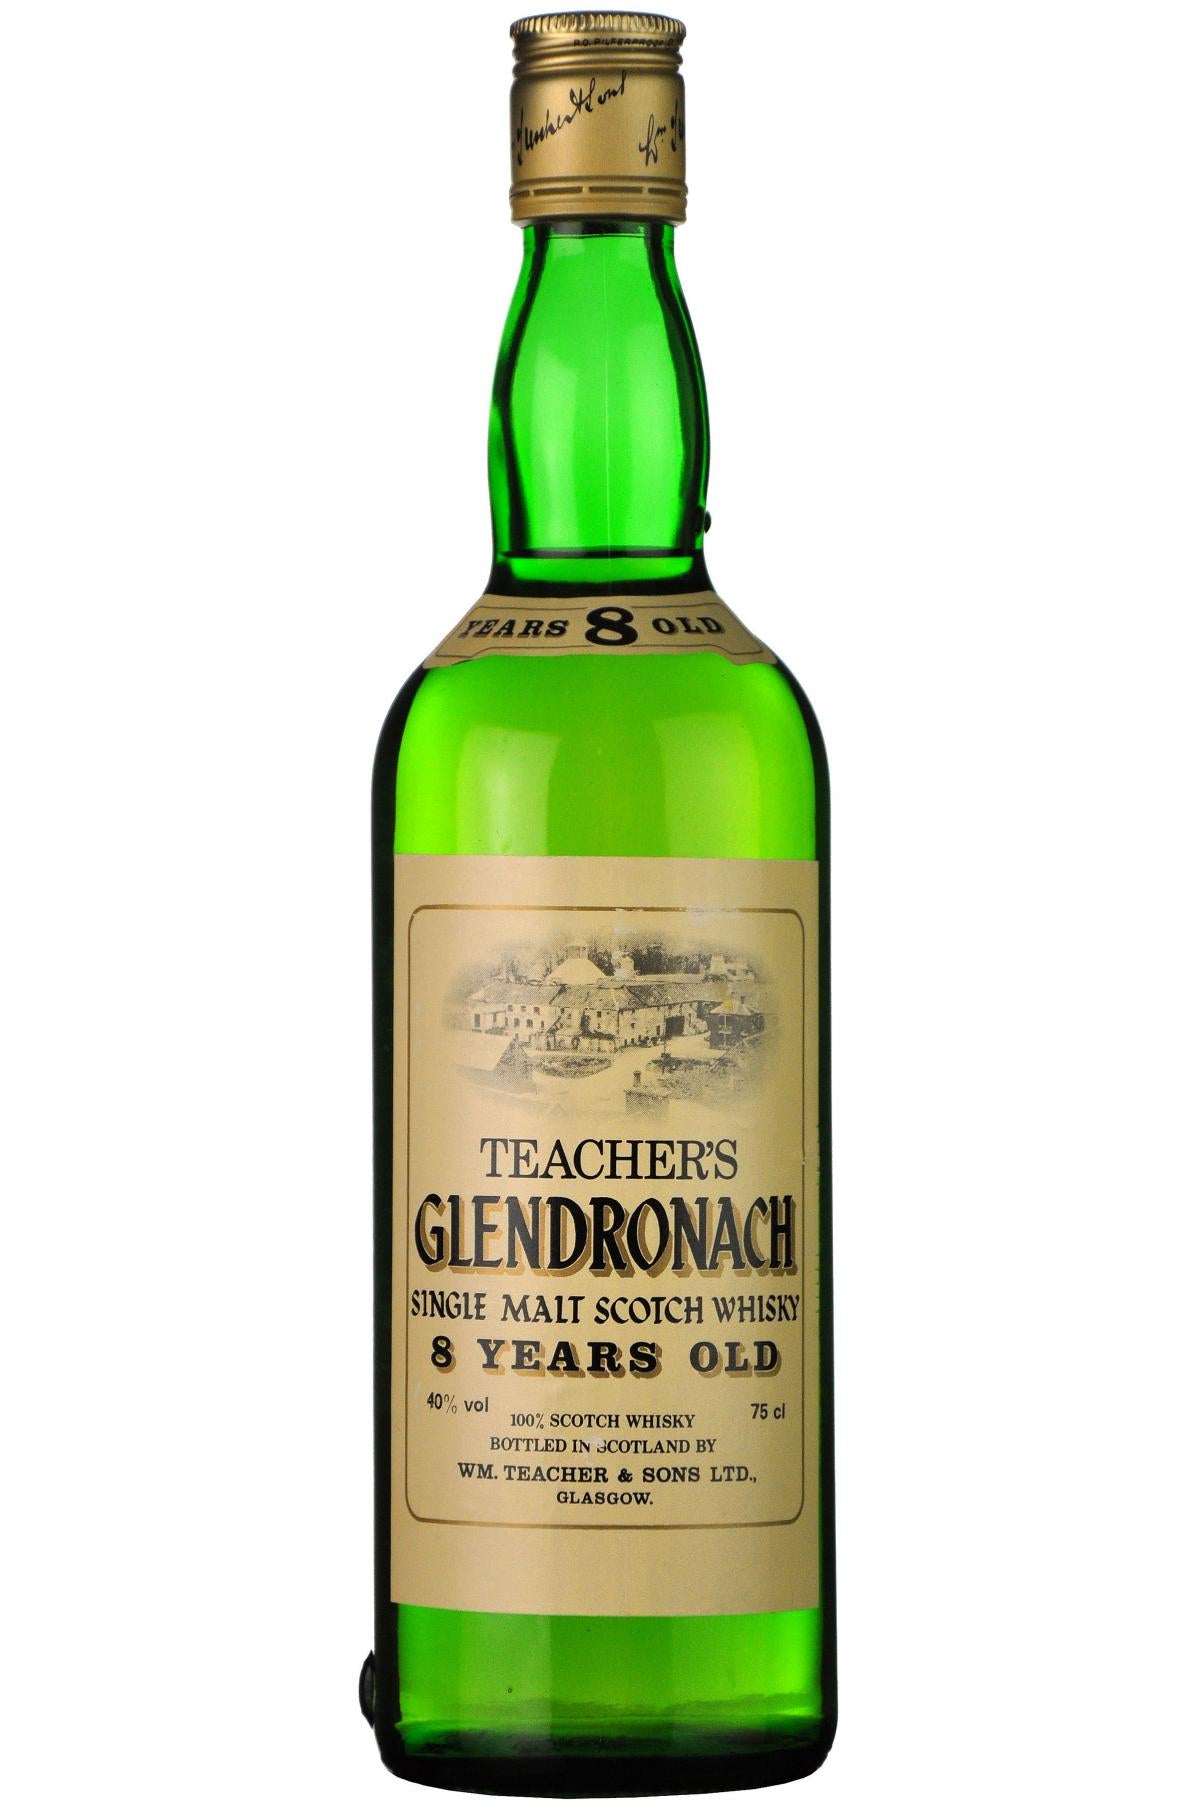 teachers glendronach 8 year old, 75cl speyside single malt scotch whisky, whiskey